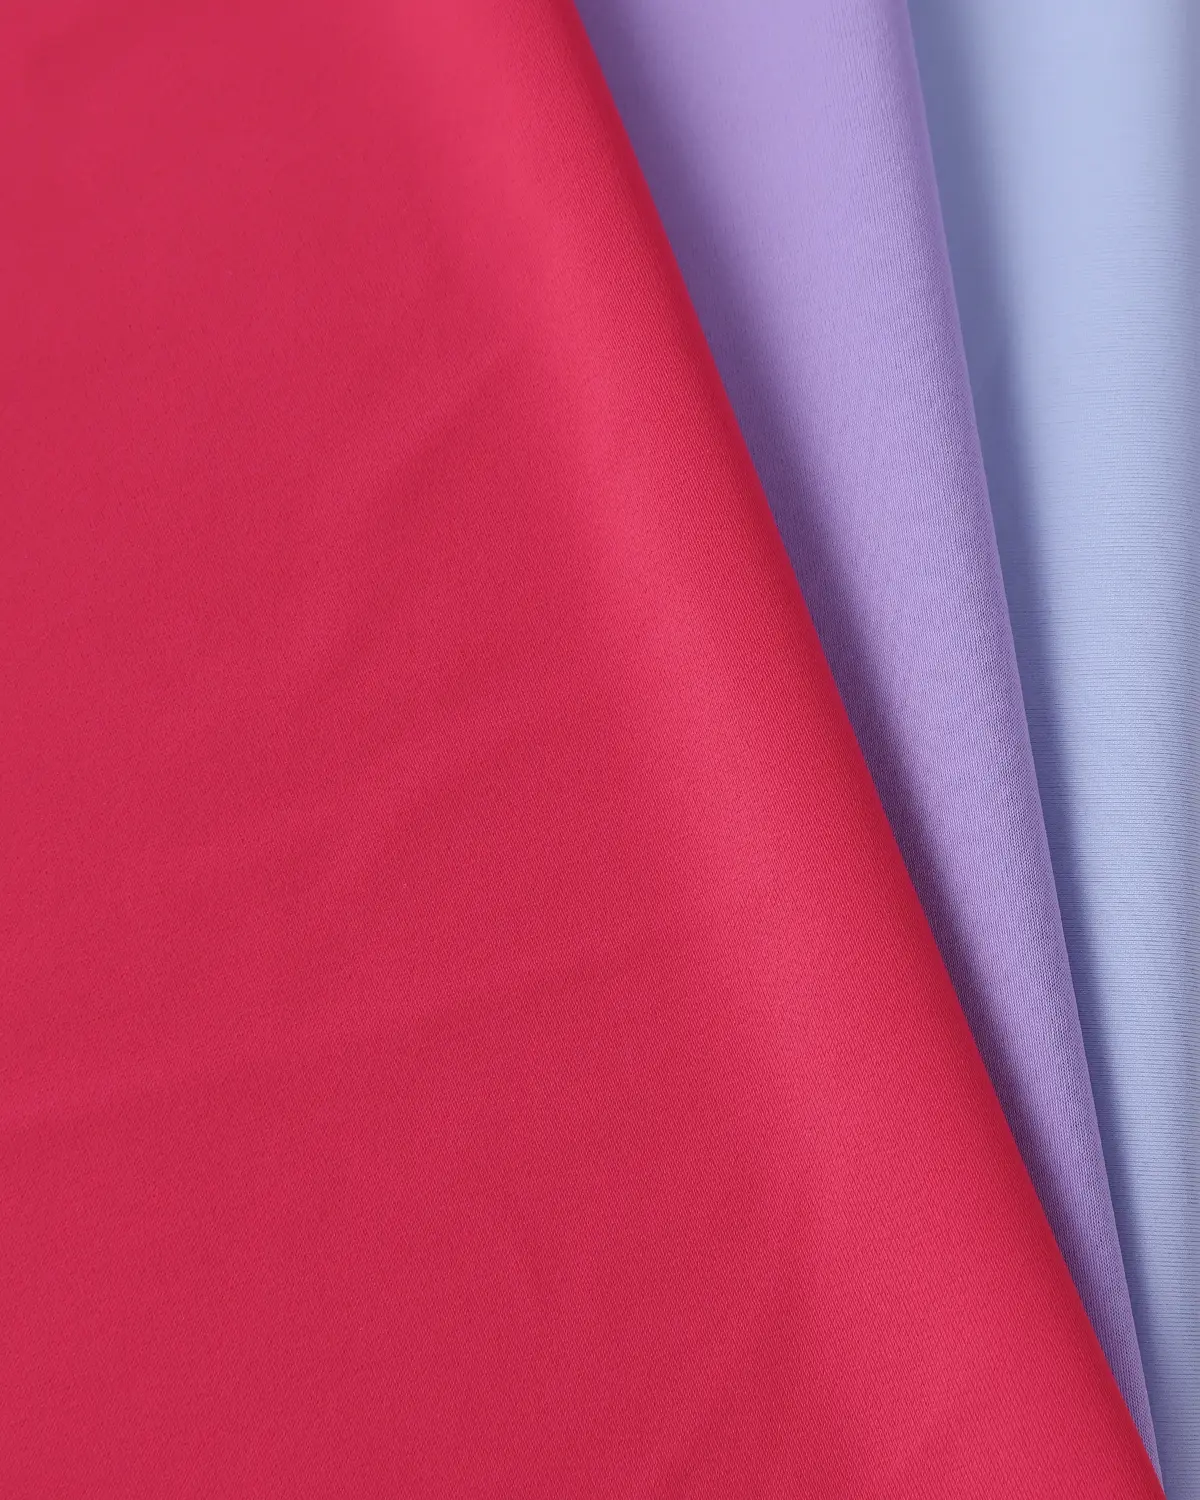 Nylon Spandex Stretch Fabric